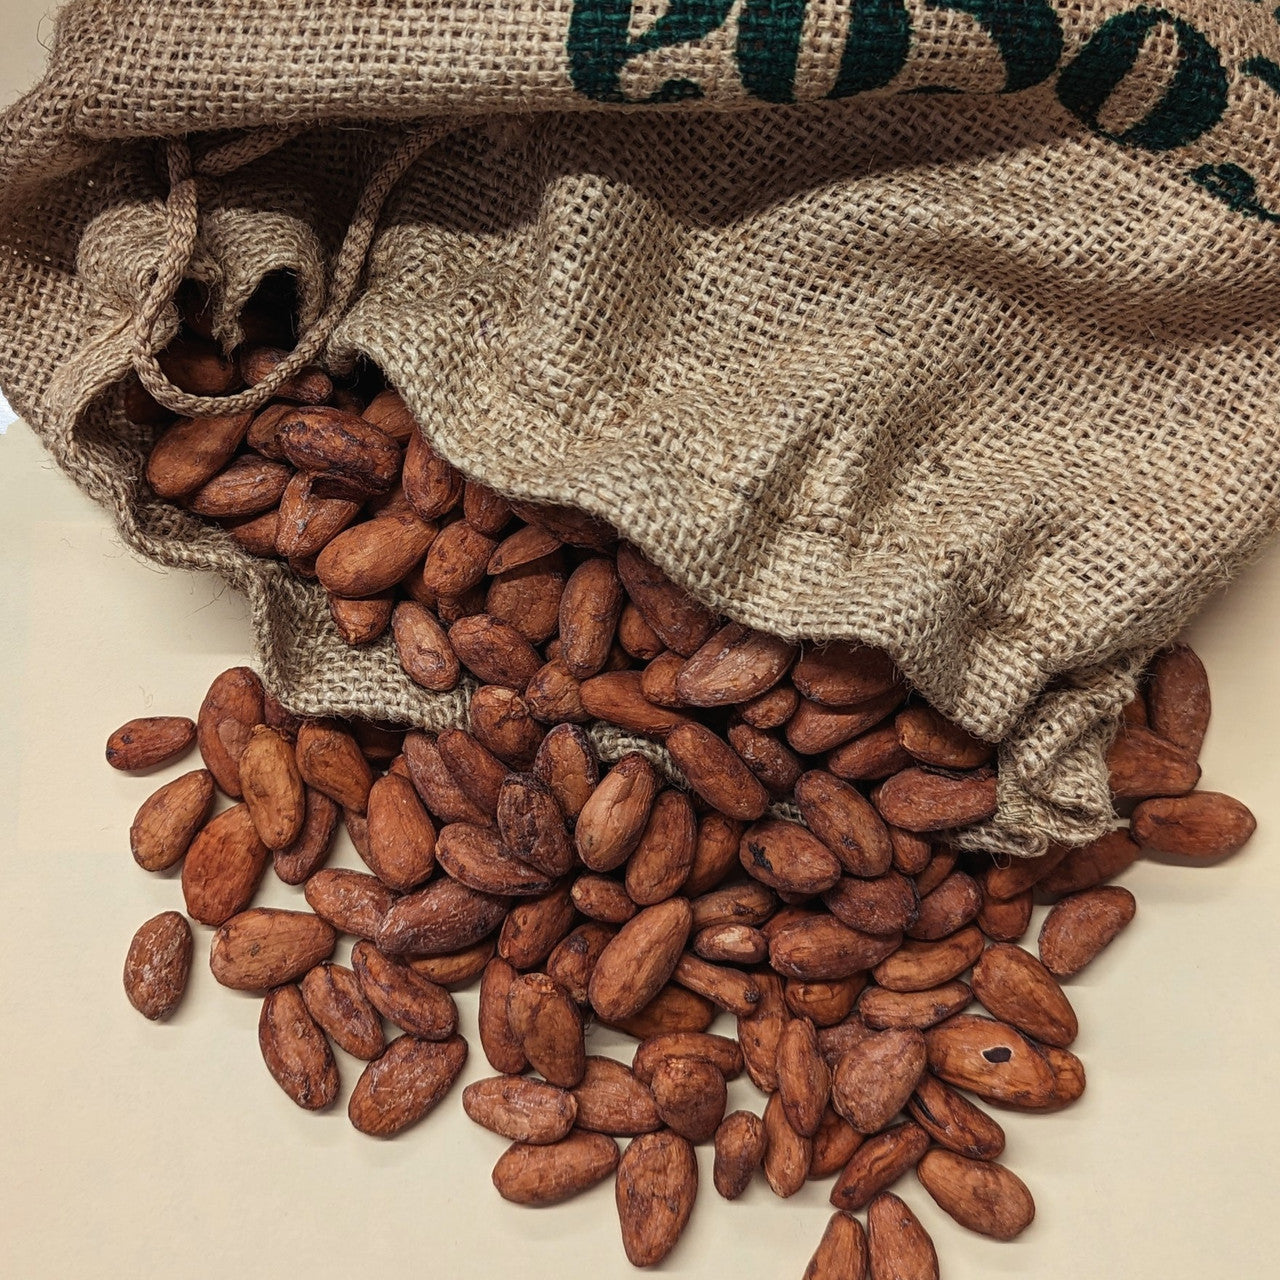 Hacienda Victoria Raw Cacao Beans - Arriba Nacional Ecuadorian Single Plantation